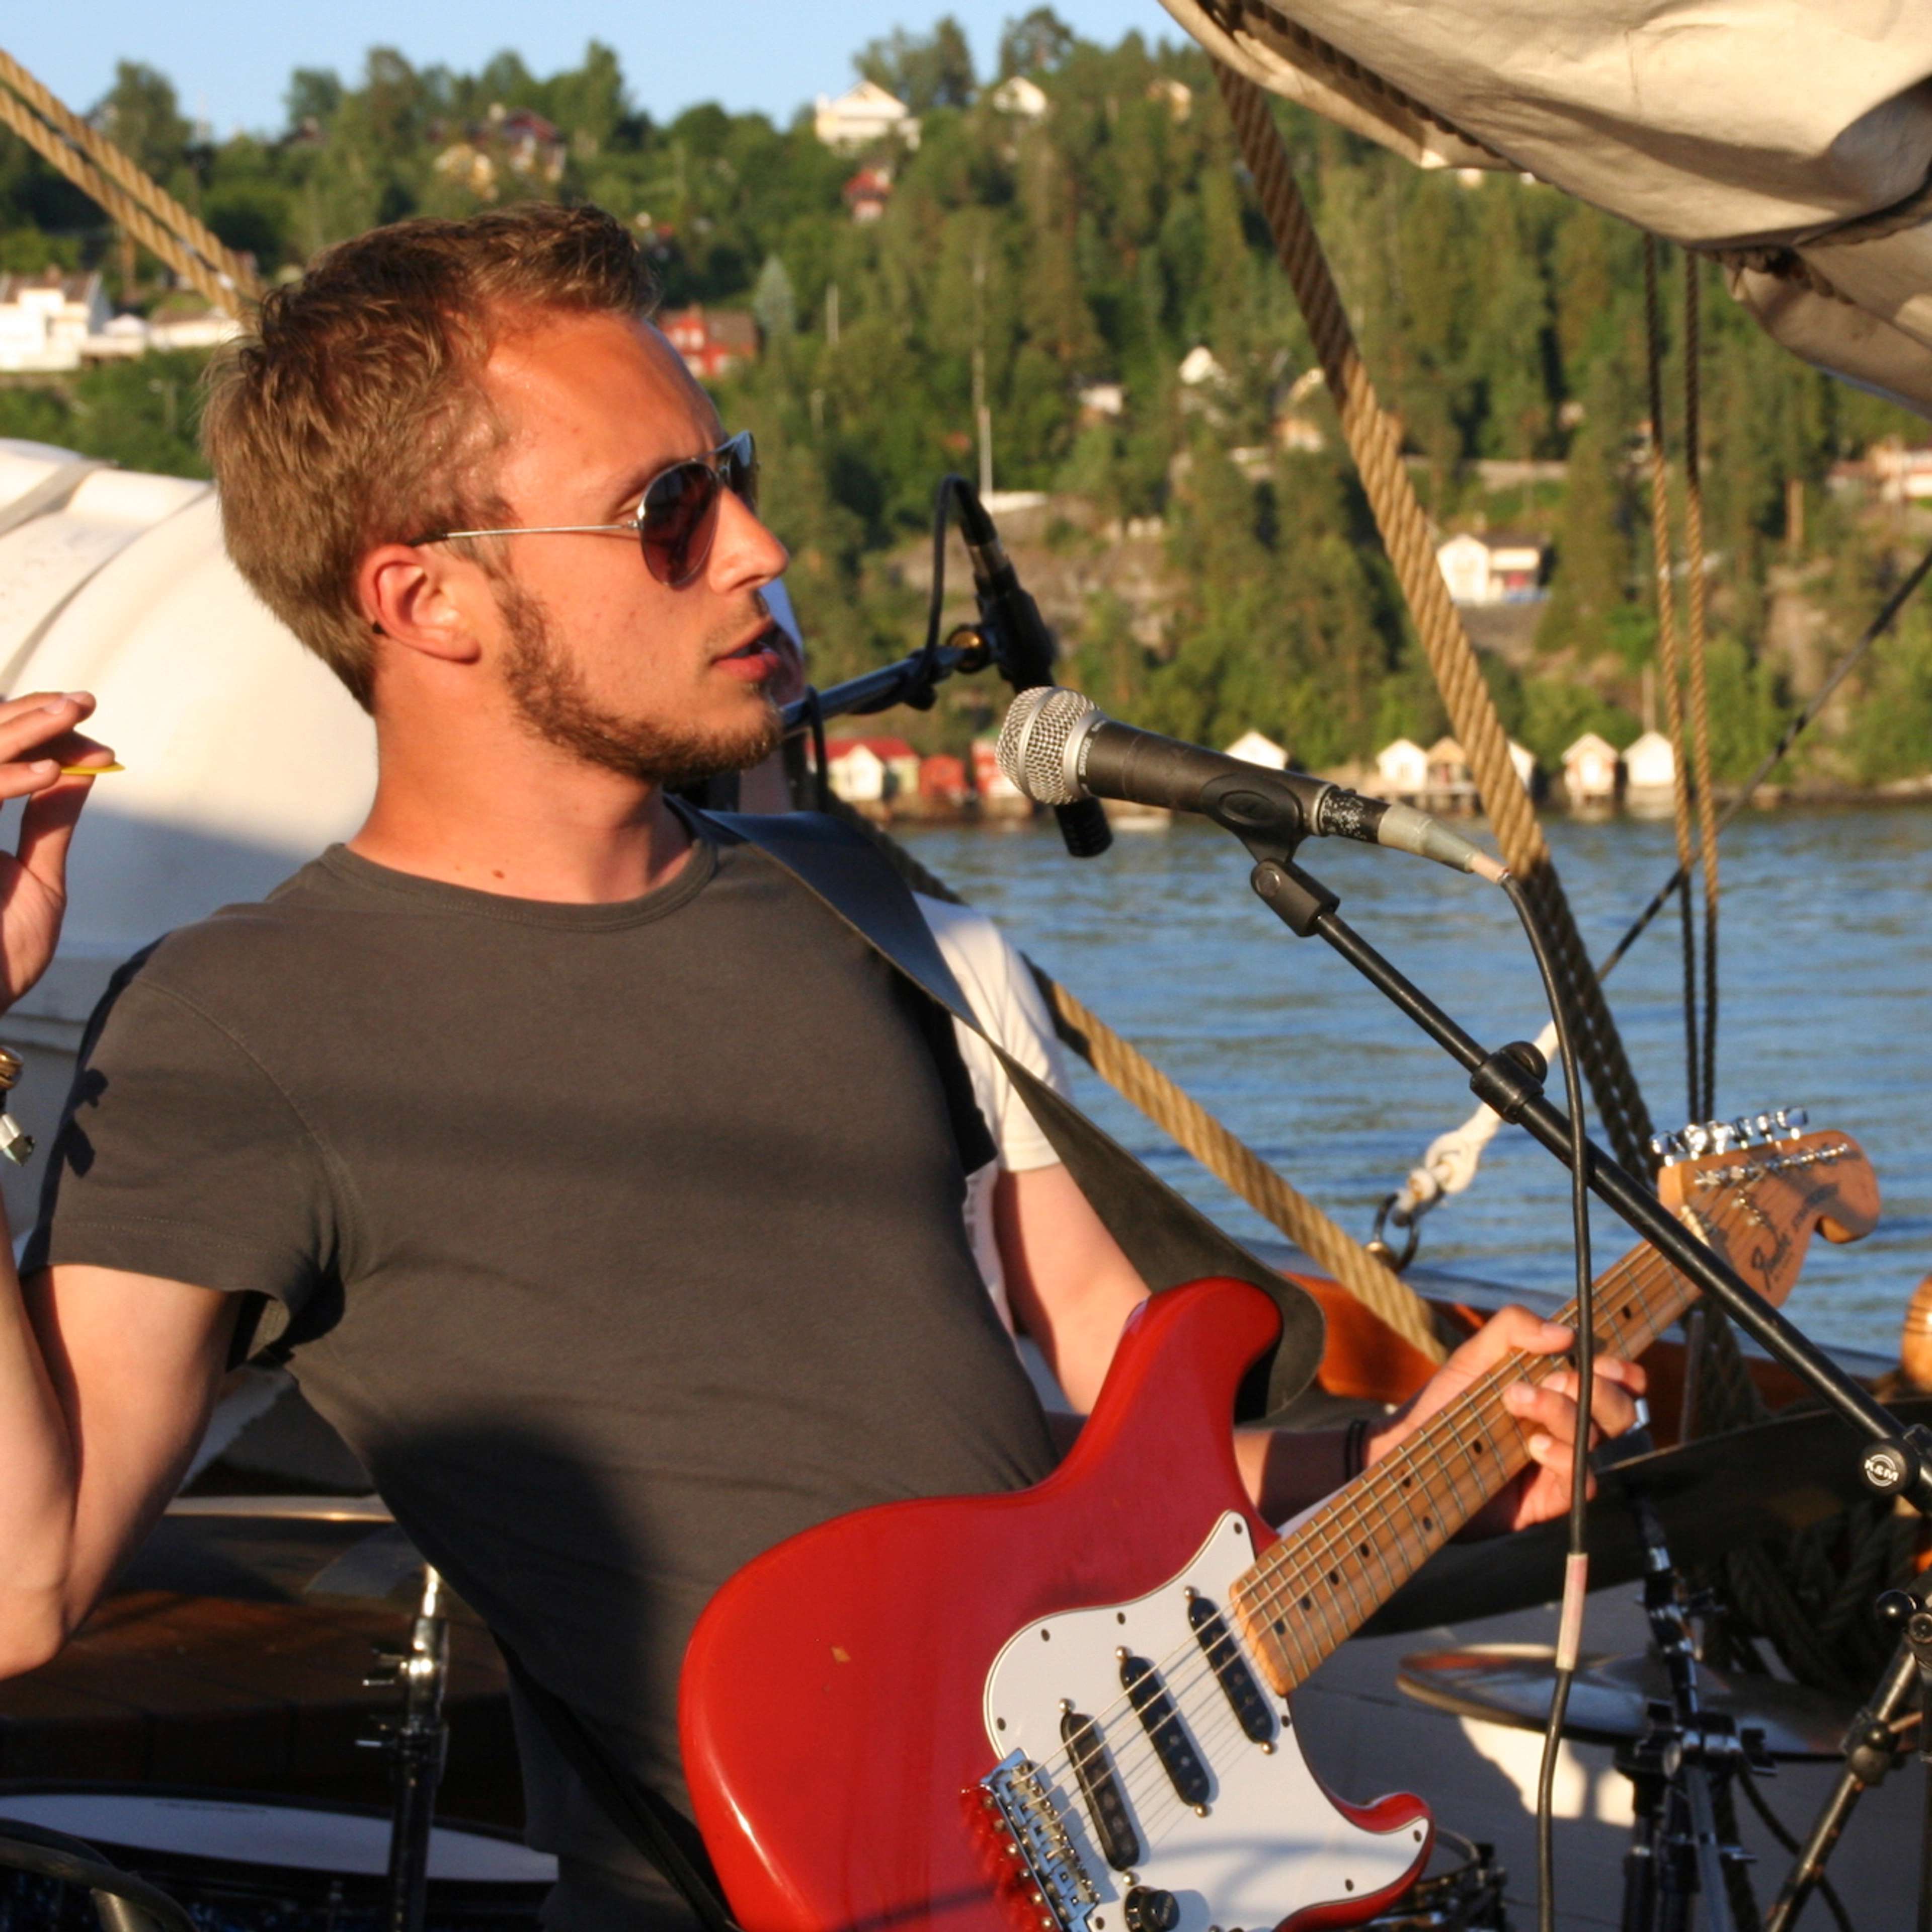 Guitarist - Jazz cruise on the Oslofjord - Oslo, Norway